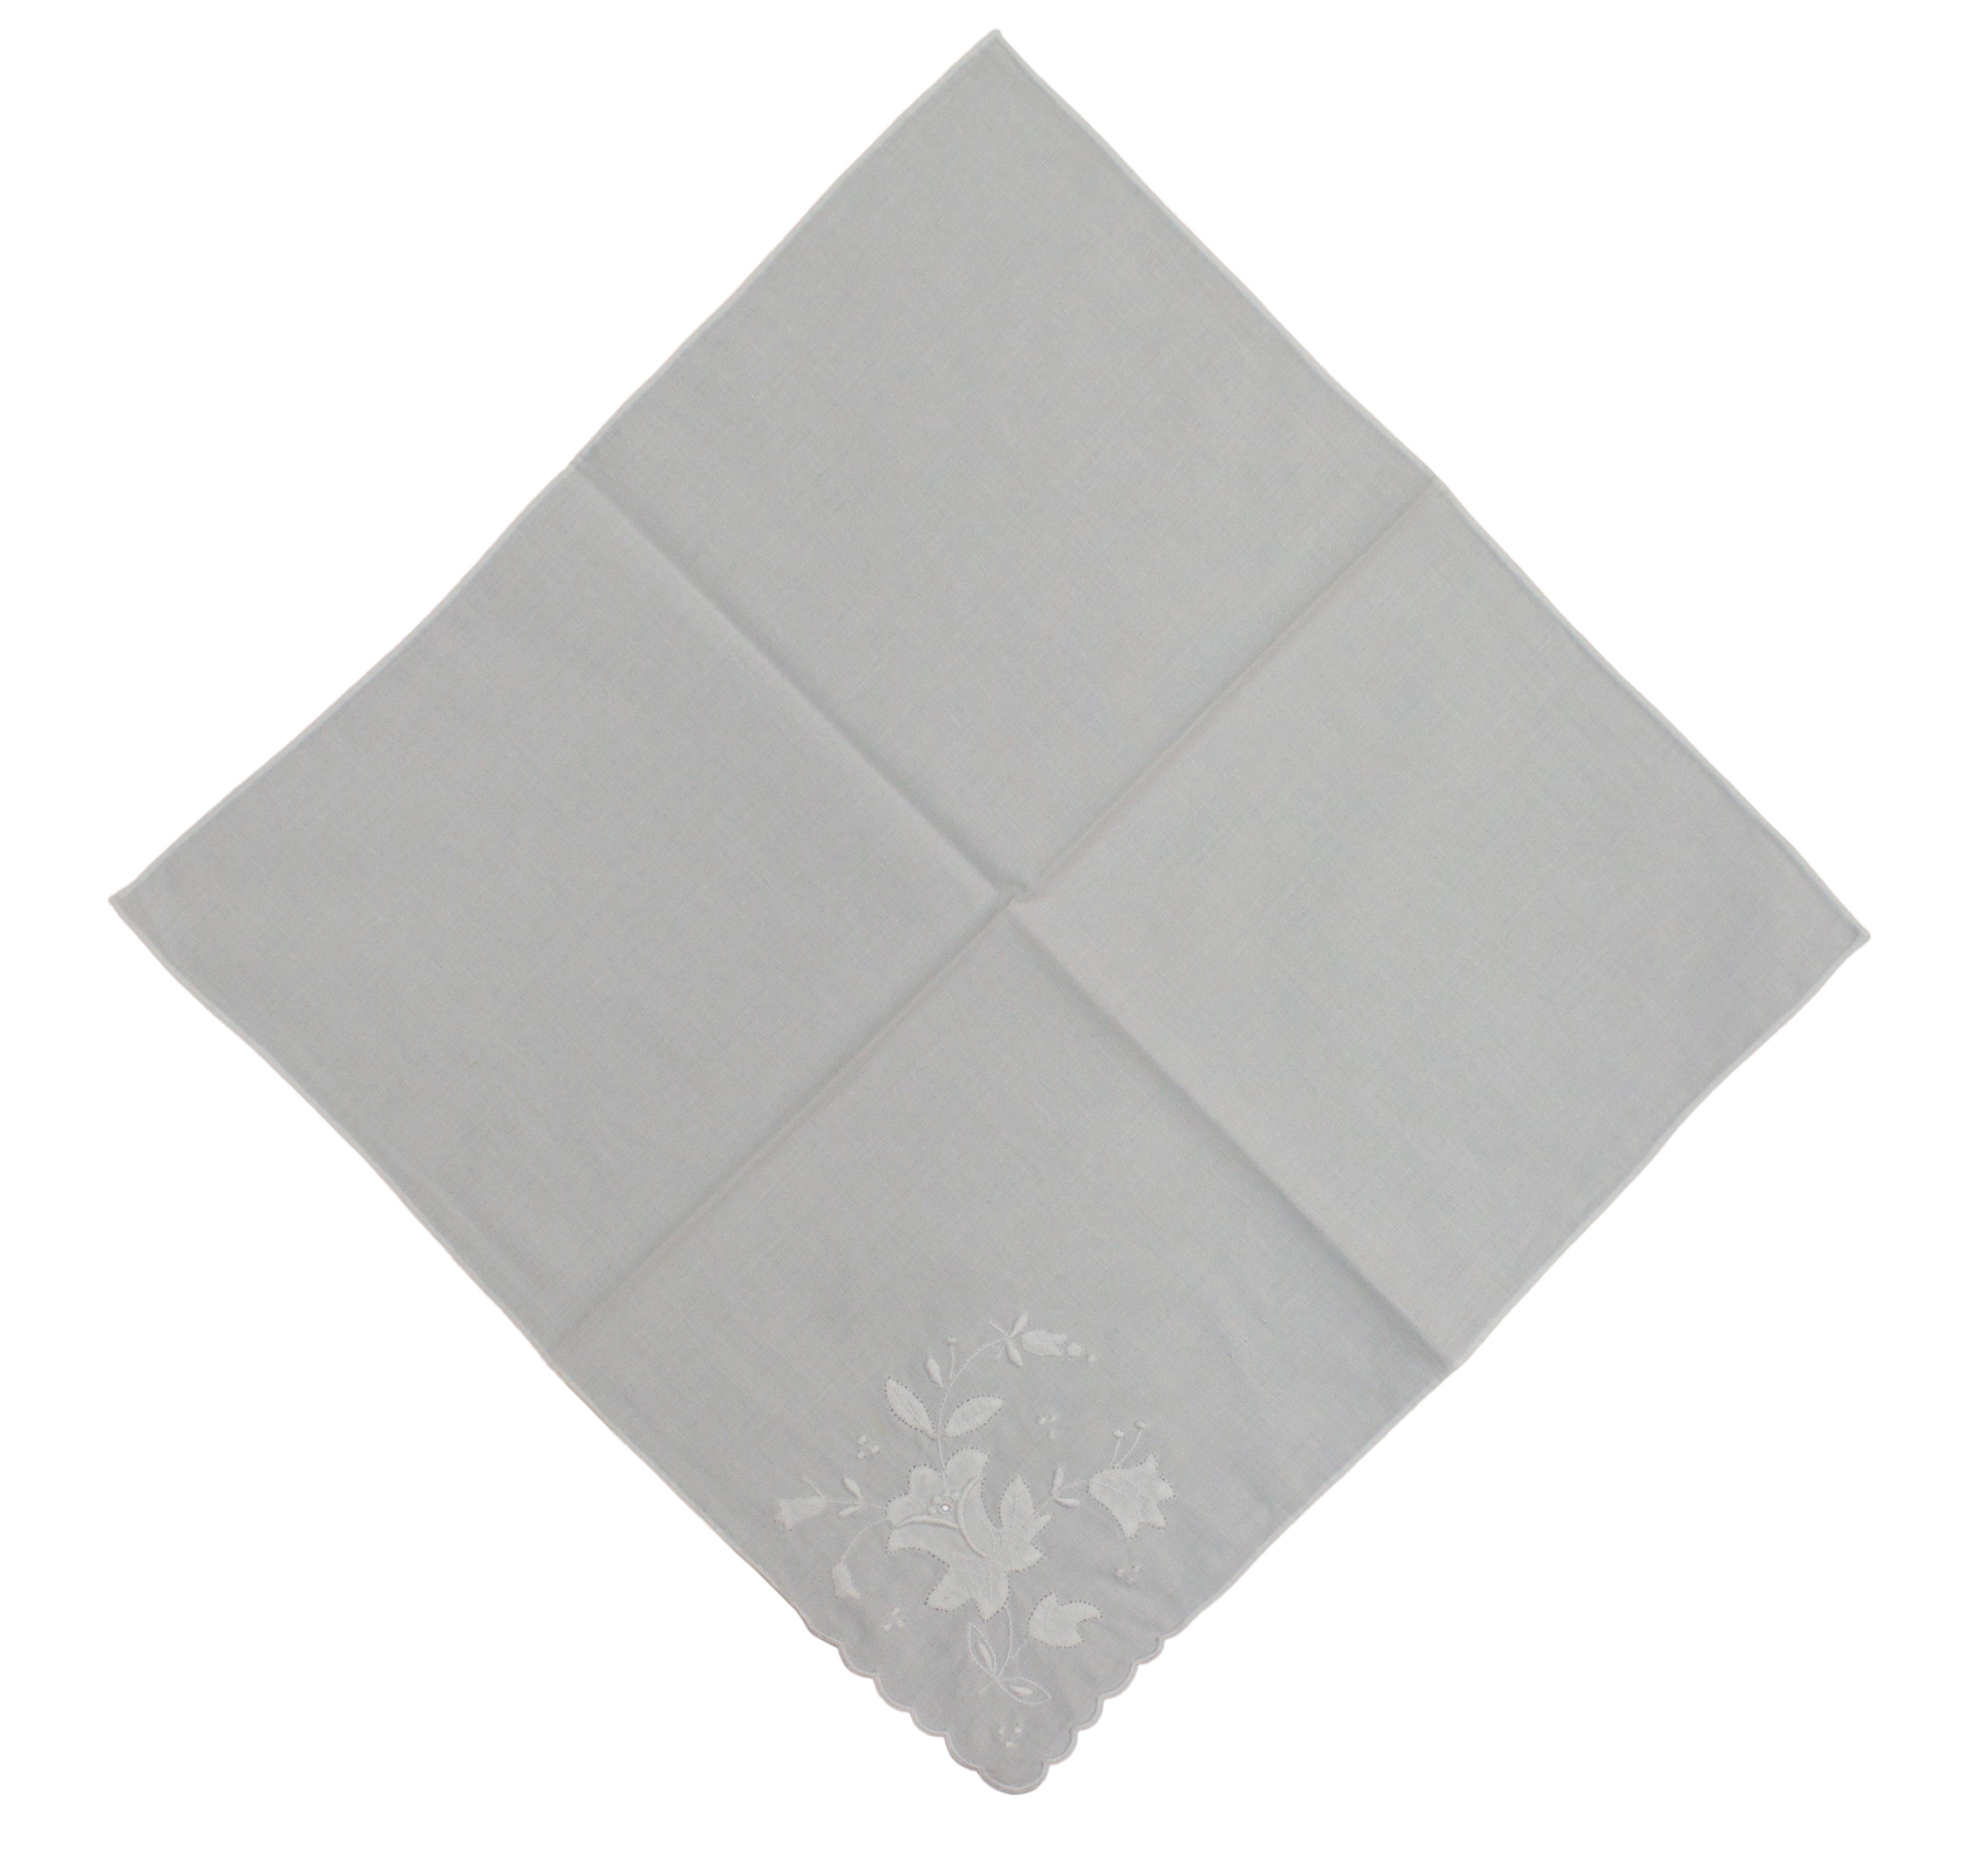 Handmade handkerchief